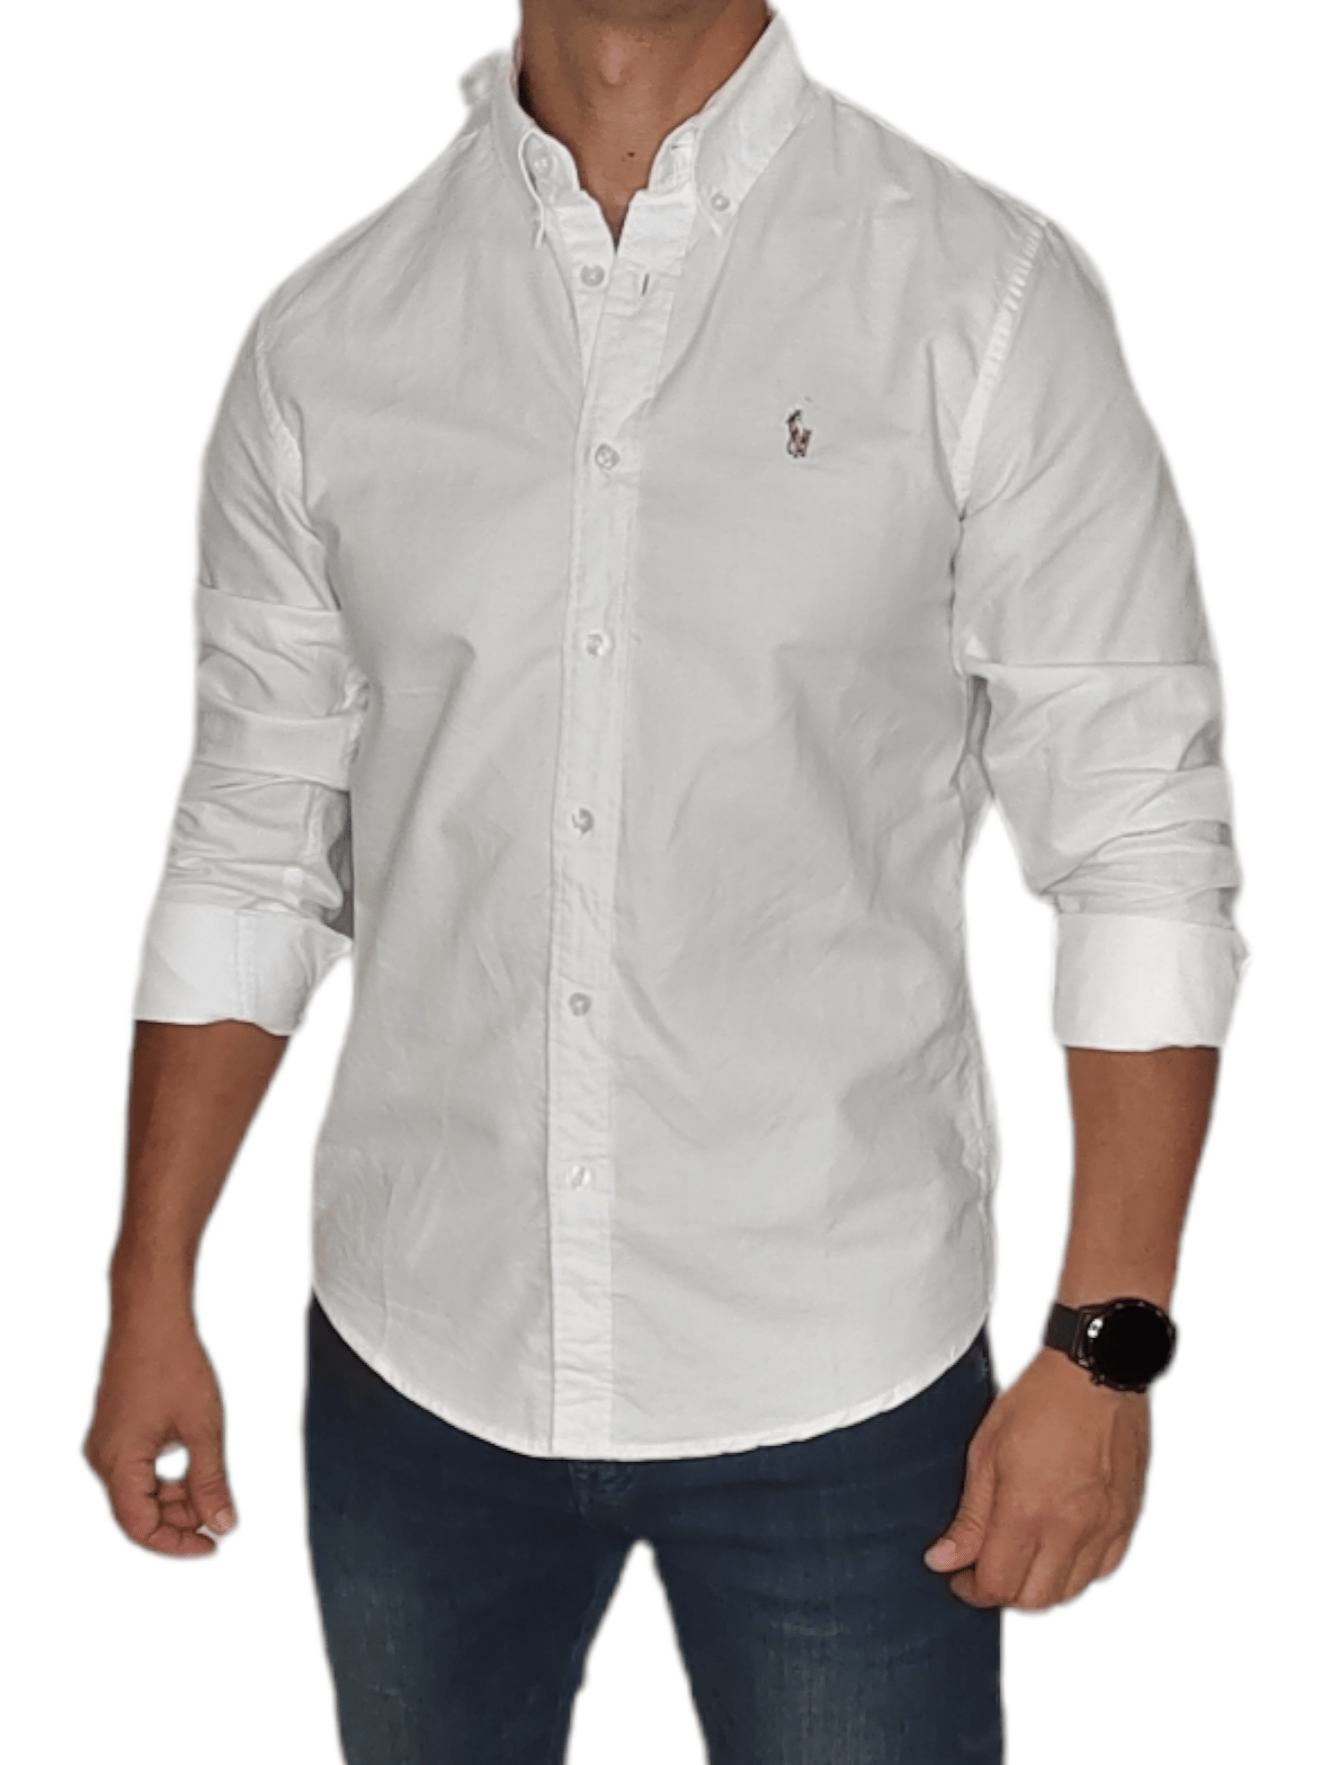 ElOutlet - Men Summer Shirts Men (local Polo) Shirt (Slim-Fit) - White